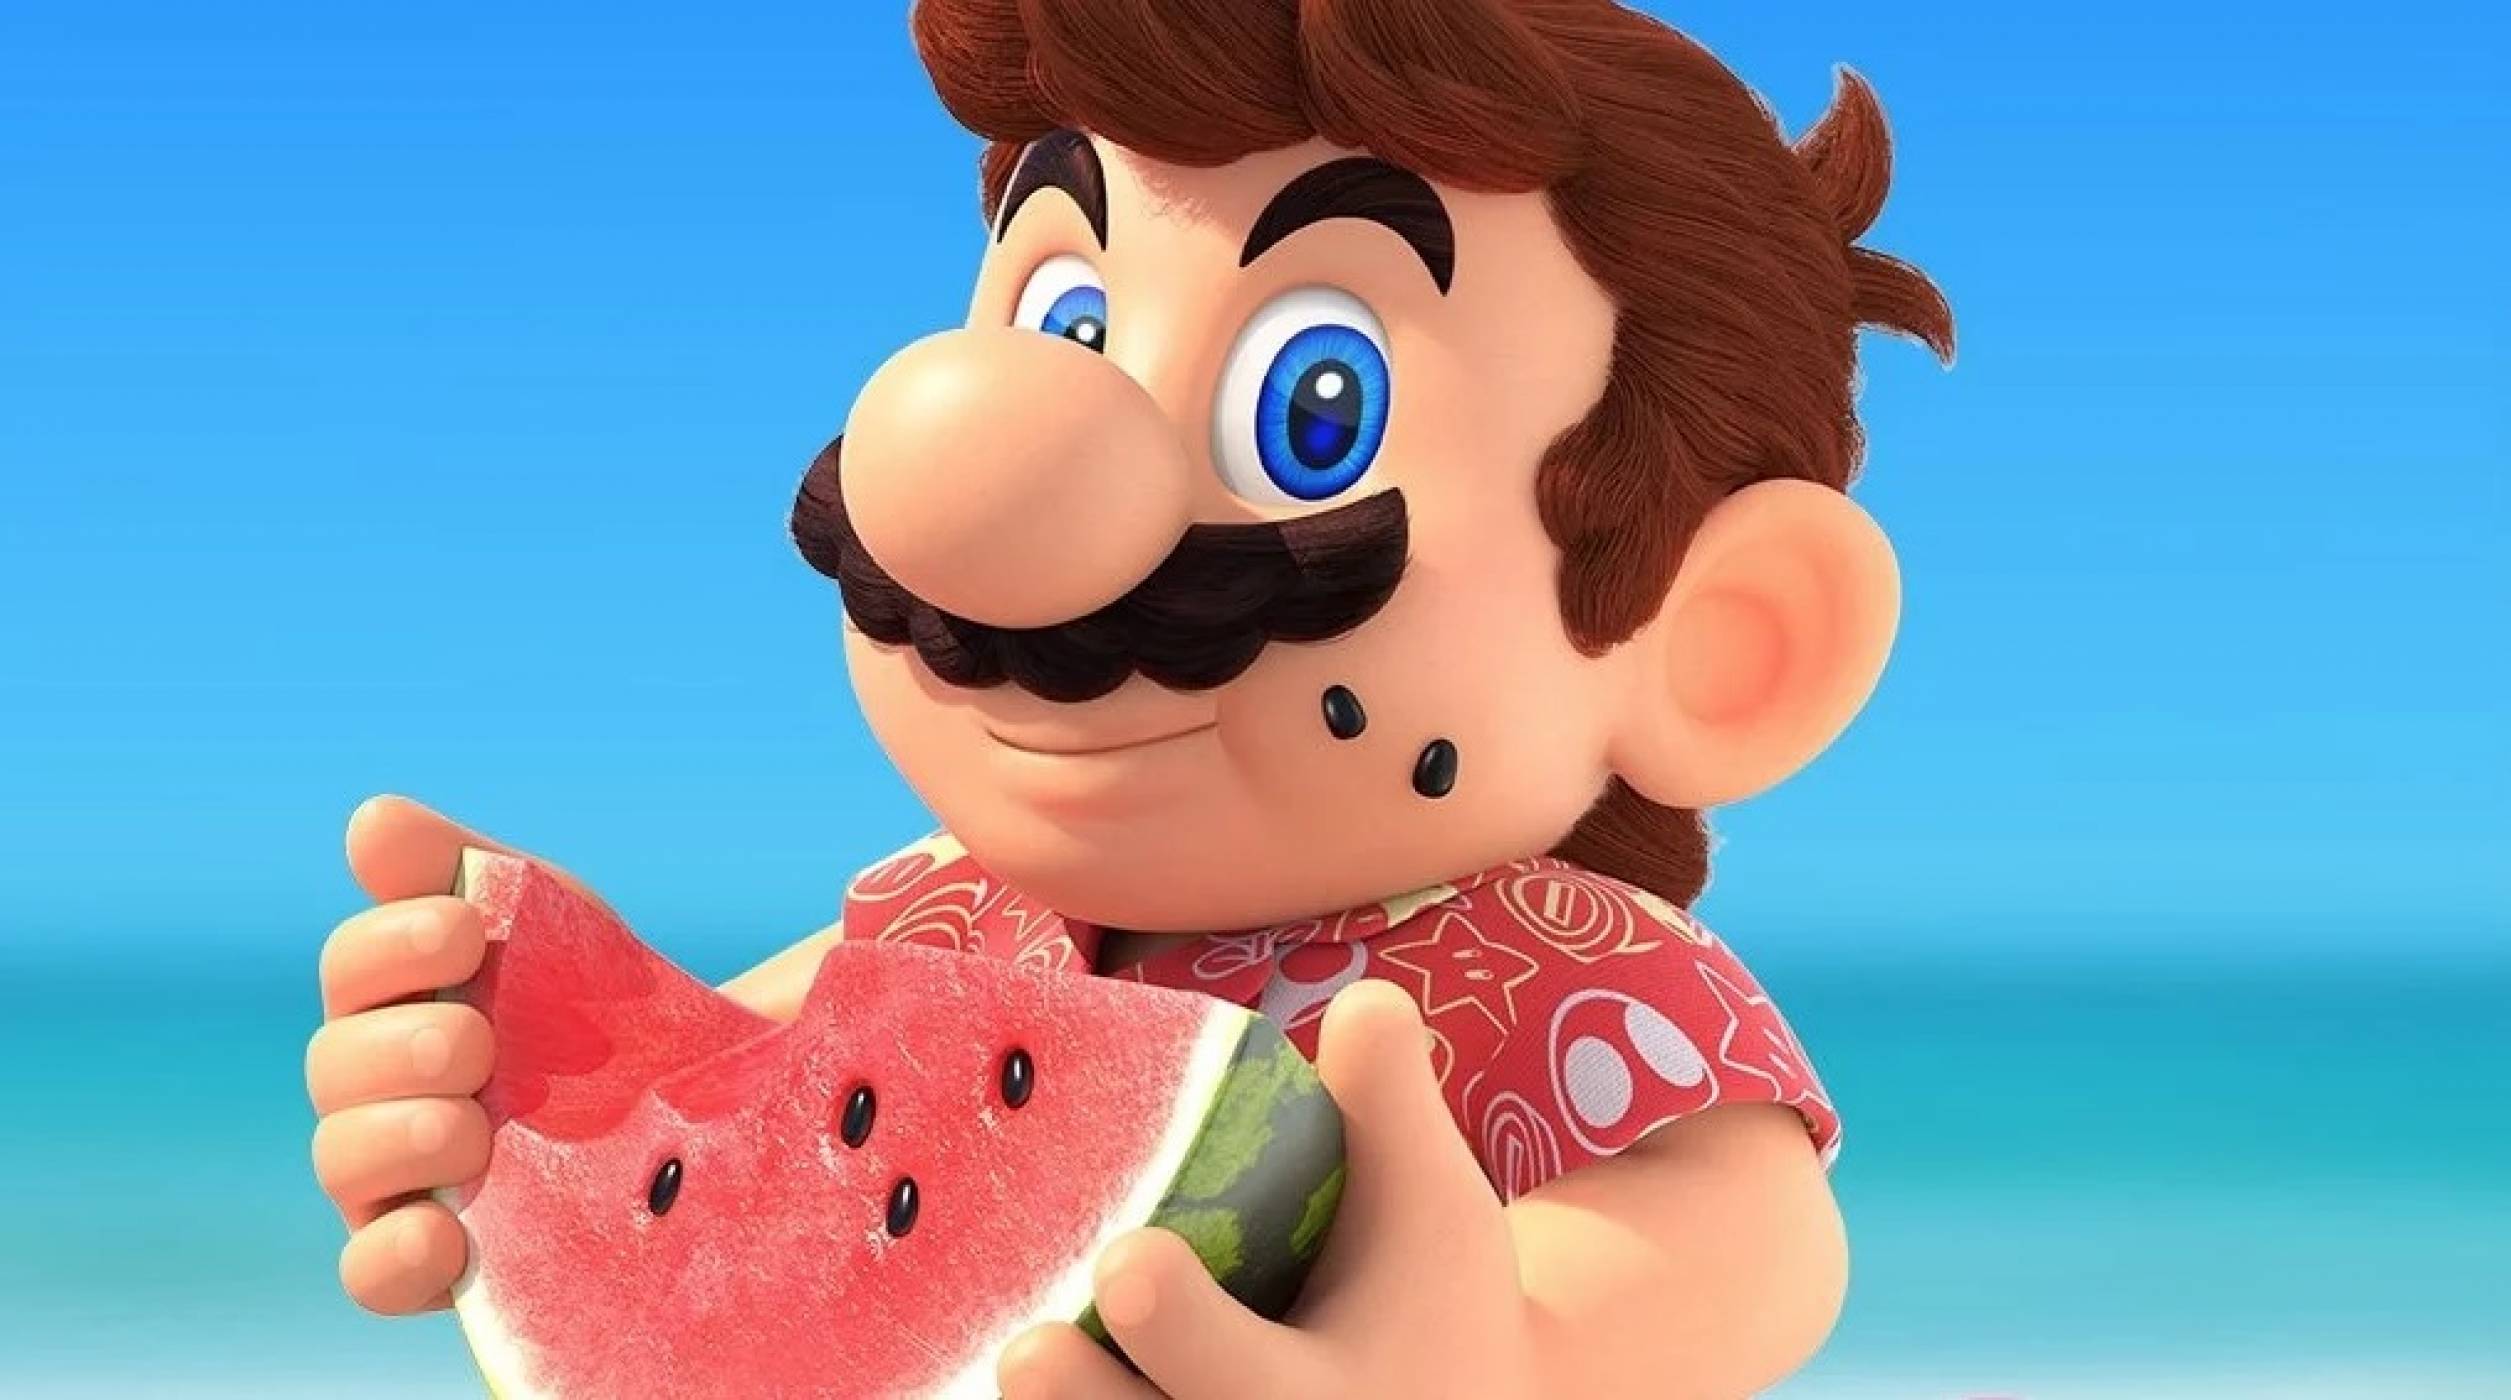 Nintendo побърка интернет с един-единствен пост за Mario